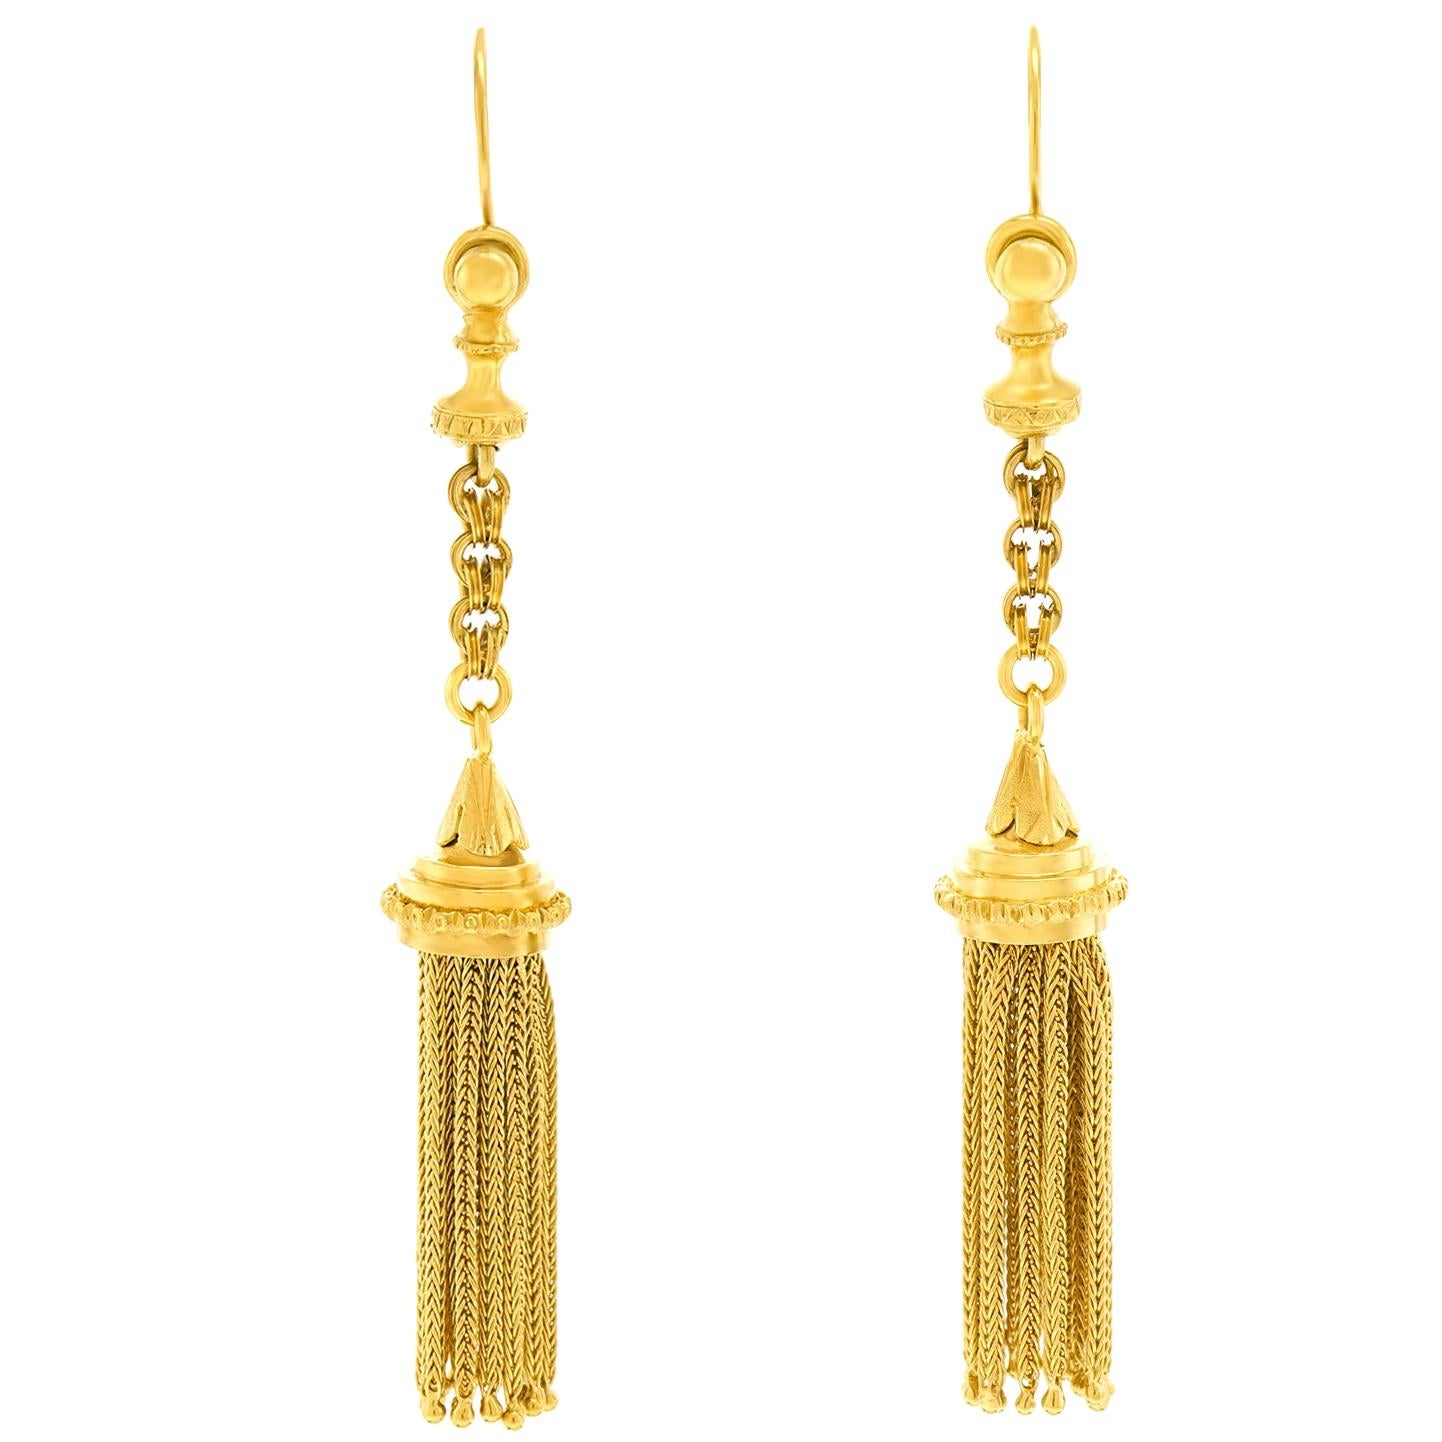 Stunning Gold Victorian Tassel Earrings